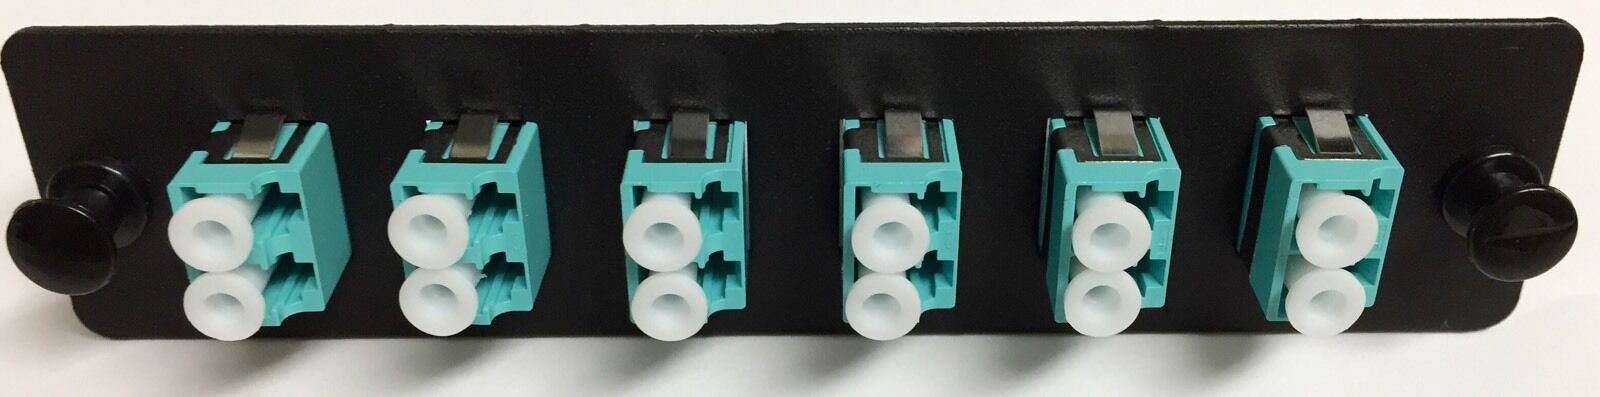 Fiber Optic Adapter Panel, 10 Gig Multimode, 6 LC Duplex, 12 Ports om3 - 8731